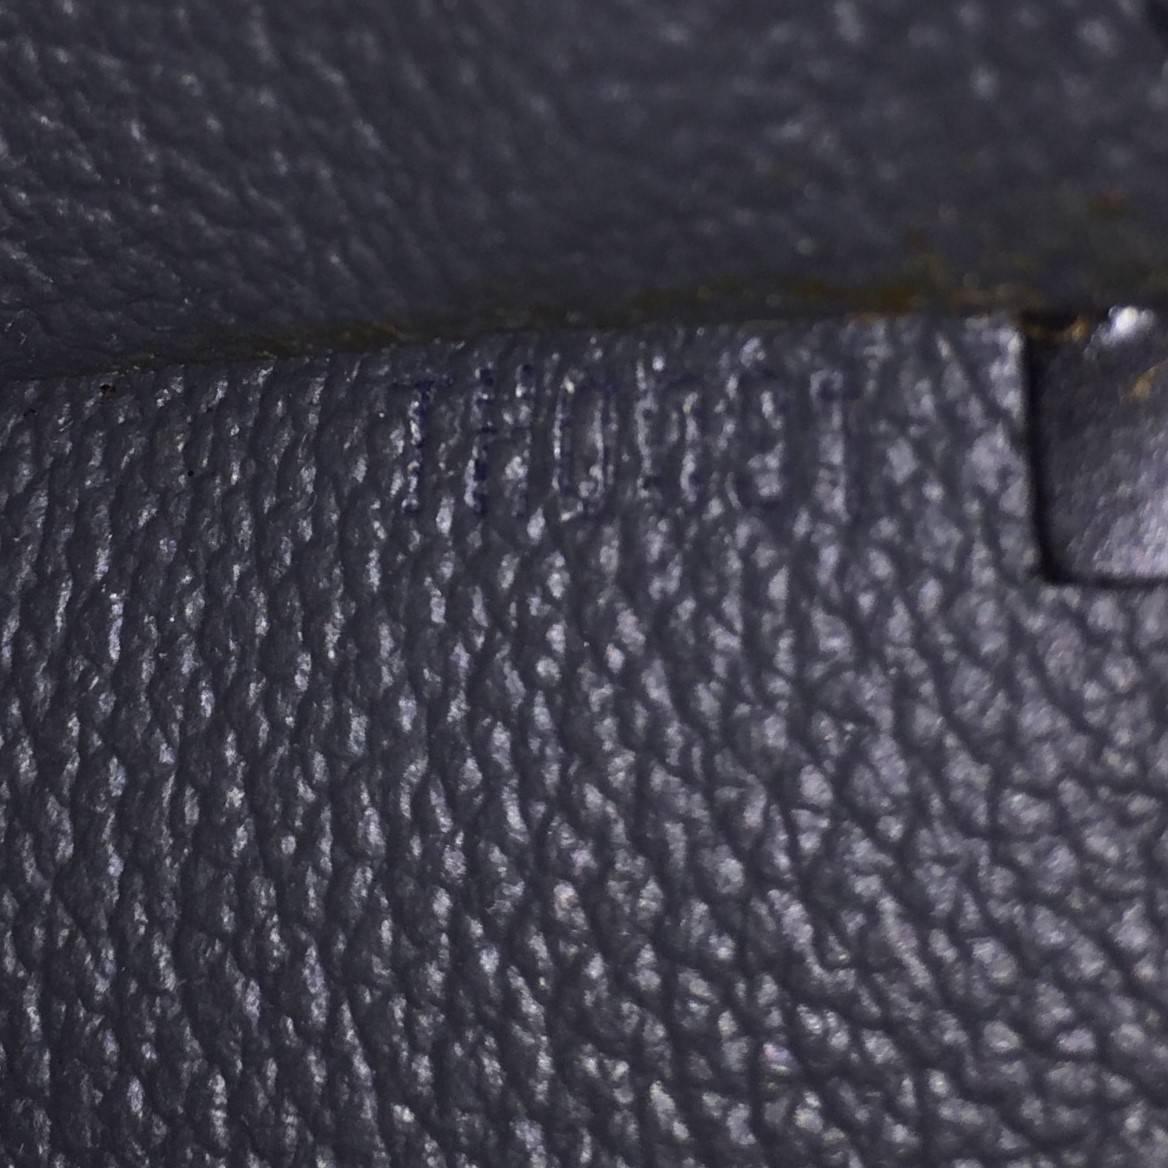 Louis Vuitton Riviera Handbag Epi Leather 4